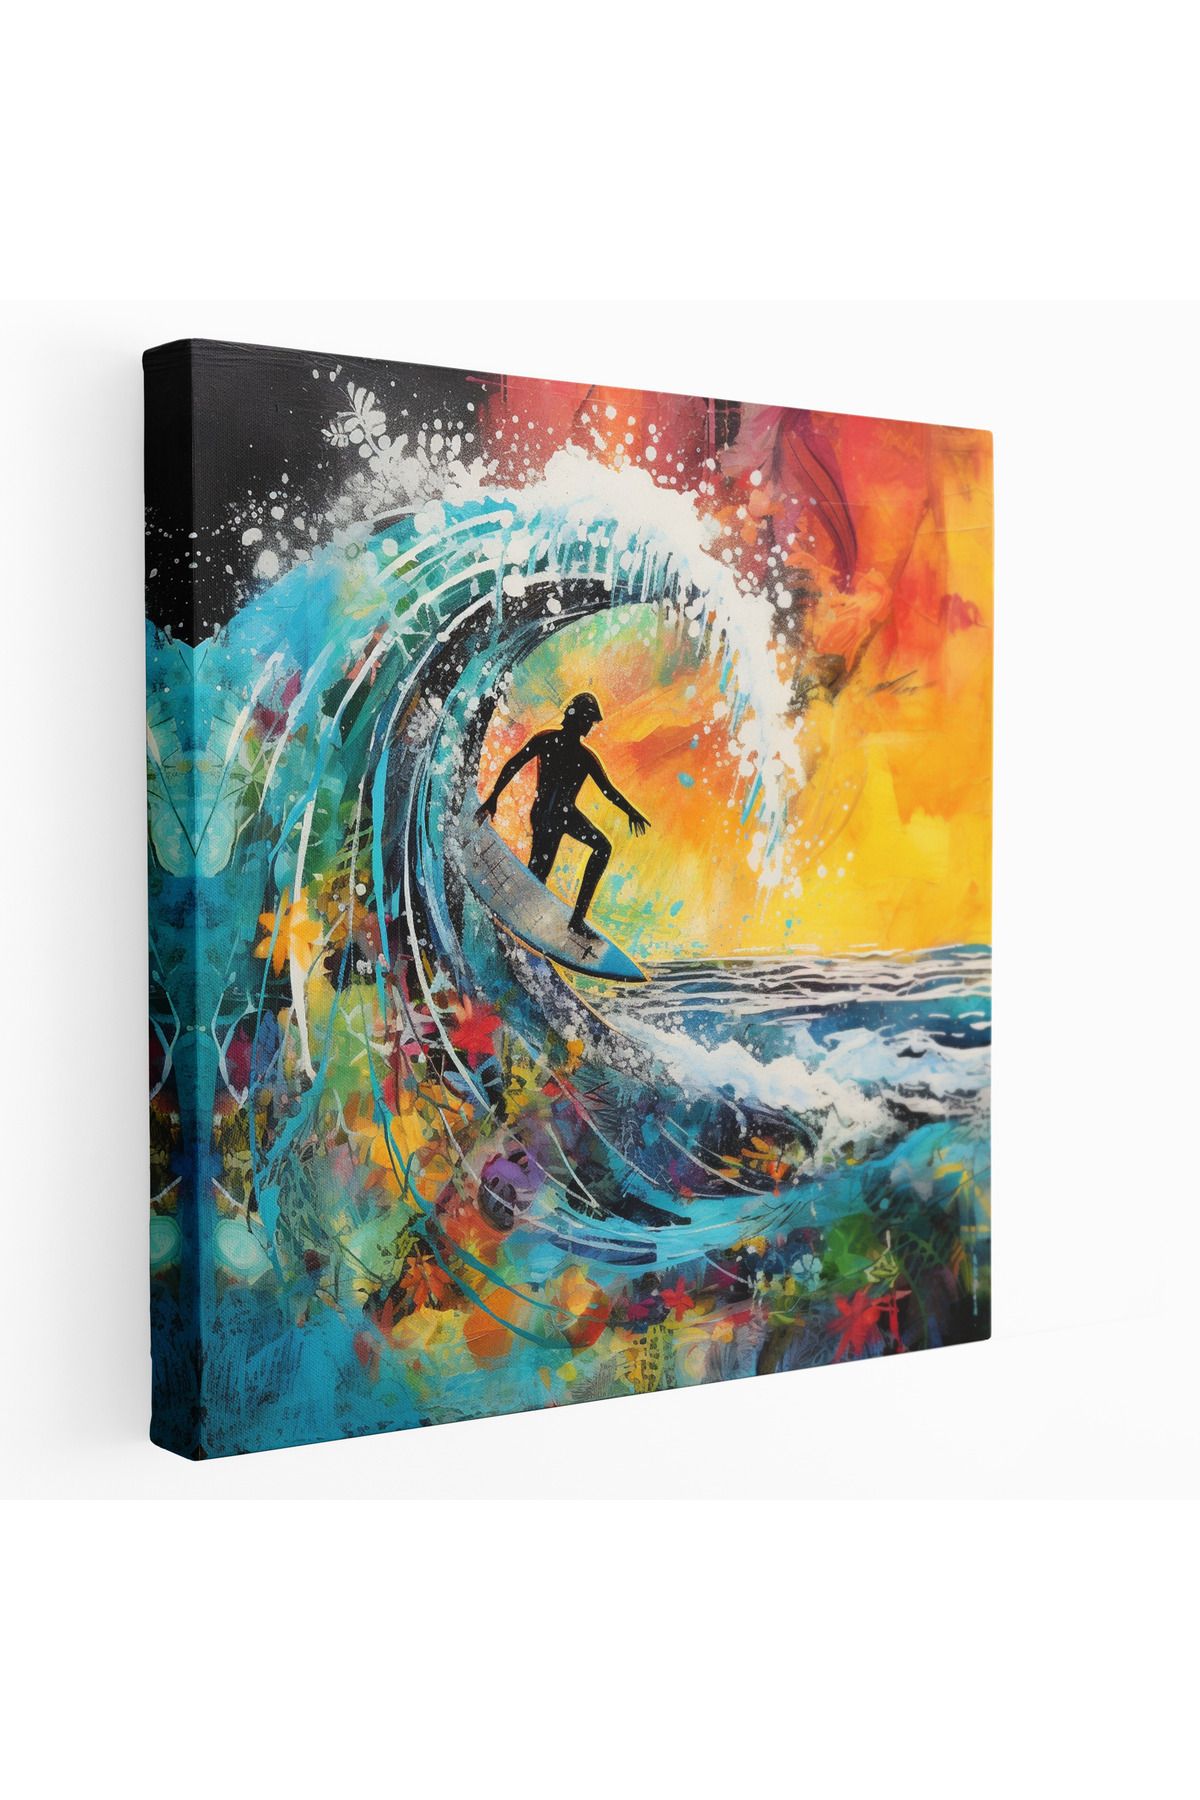 PaintedAnarchy Canlı Sörfçü Dalga Tuval Baskı Özet Karışık Medya Sanatı, Sörfçü Bir Dalga Yakalama